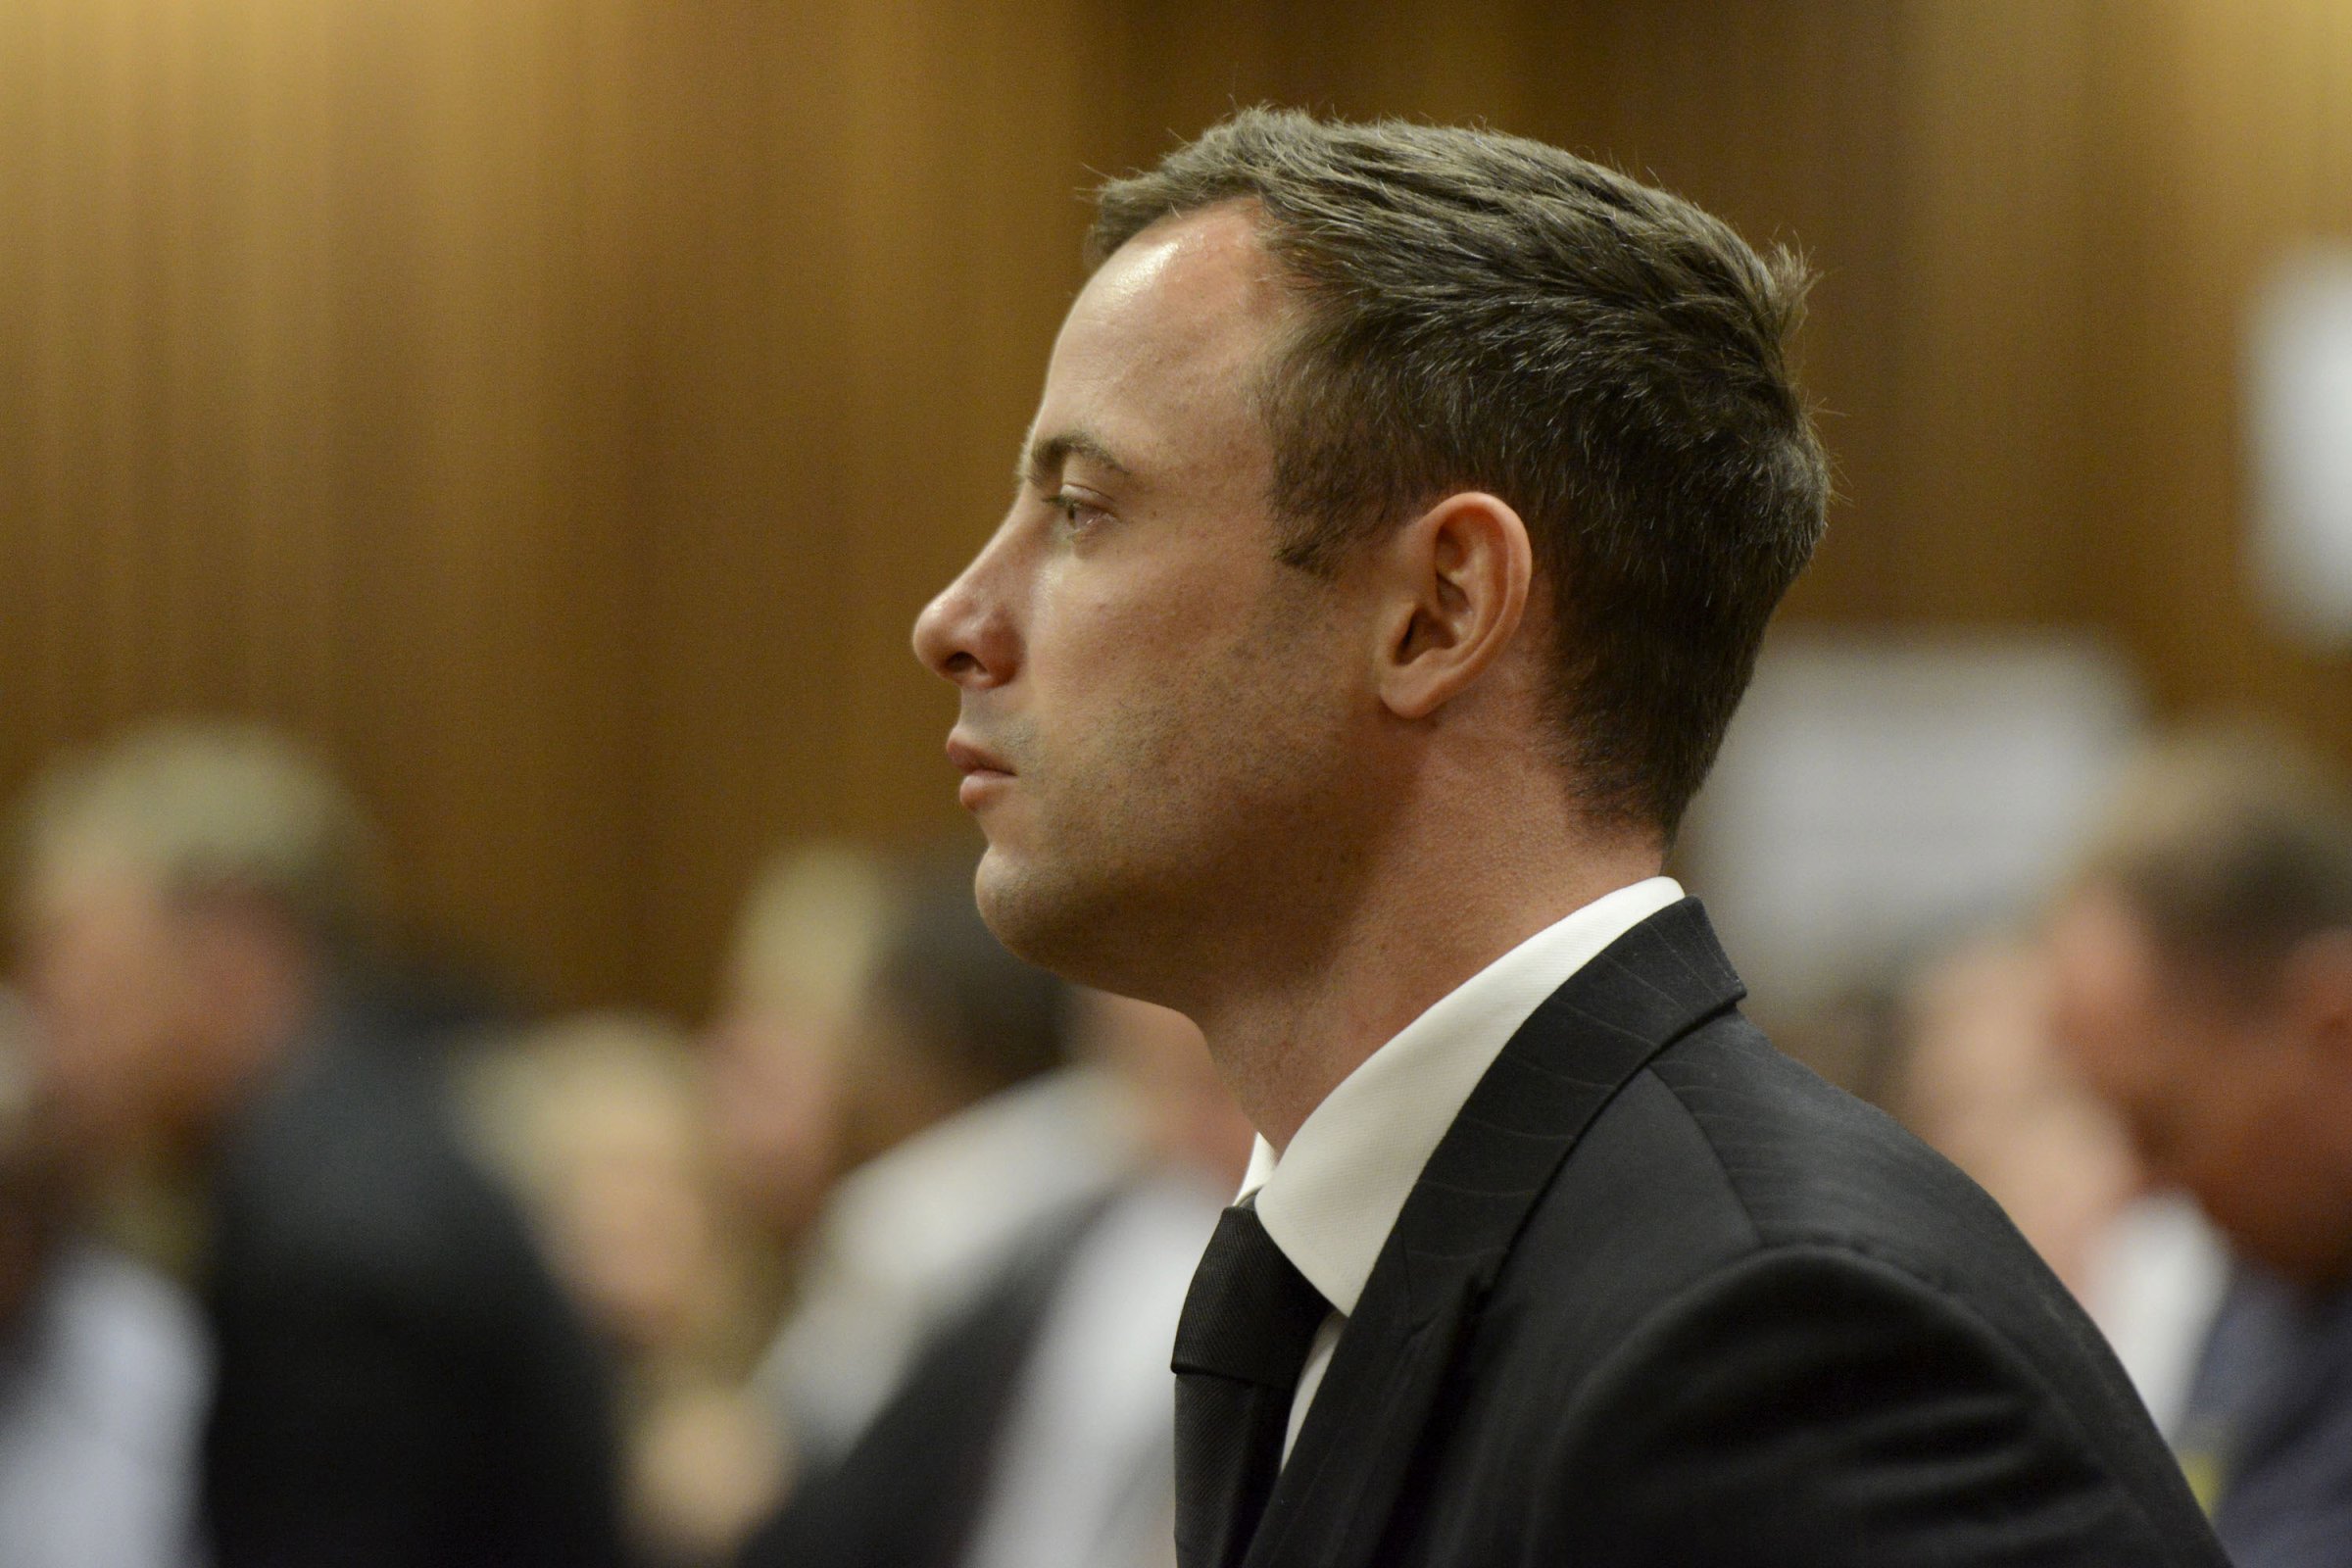 Oscar Pistorius listens to his judgement in the Pretoria High Court on October 21, 2014, in Pretoria, South Africa.